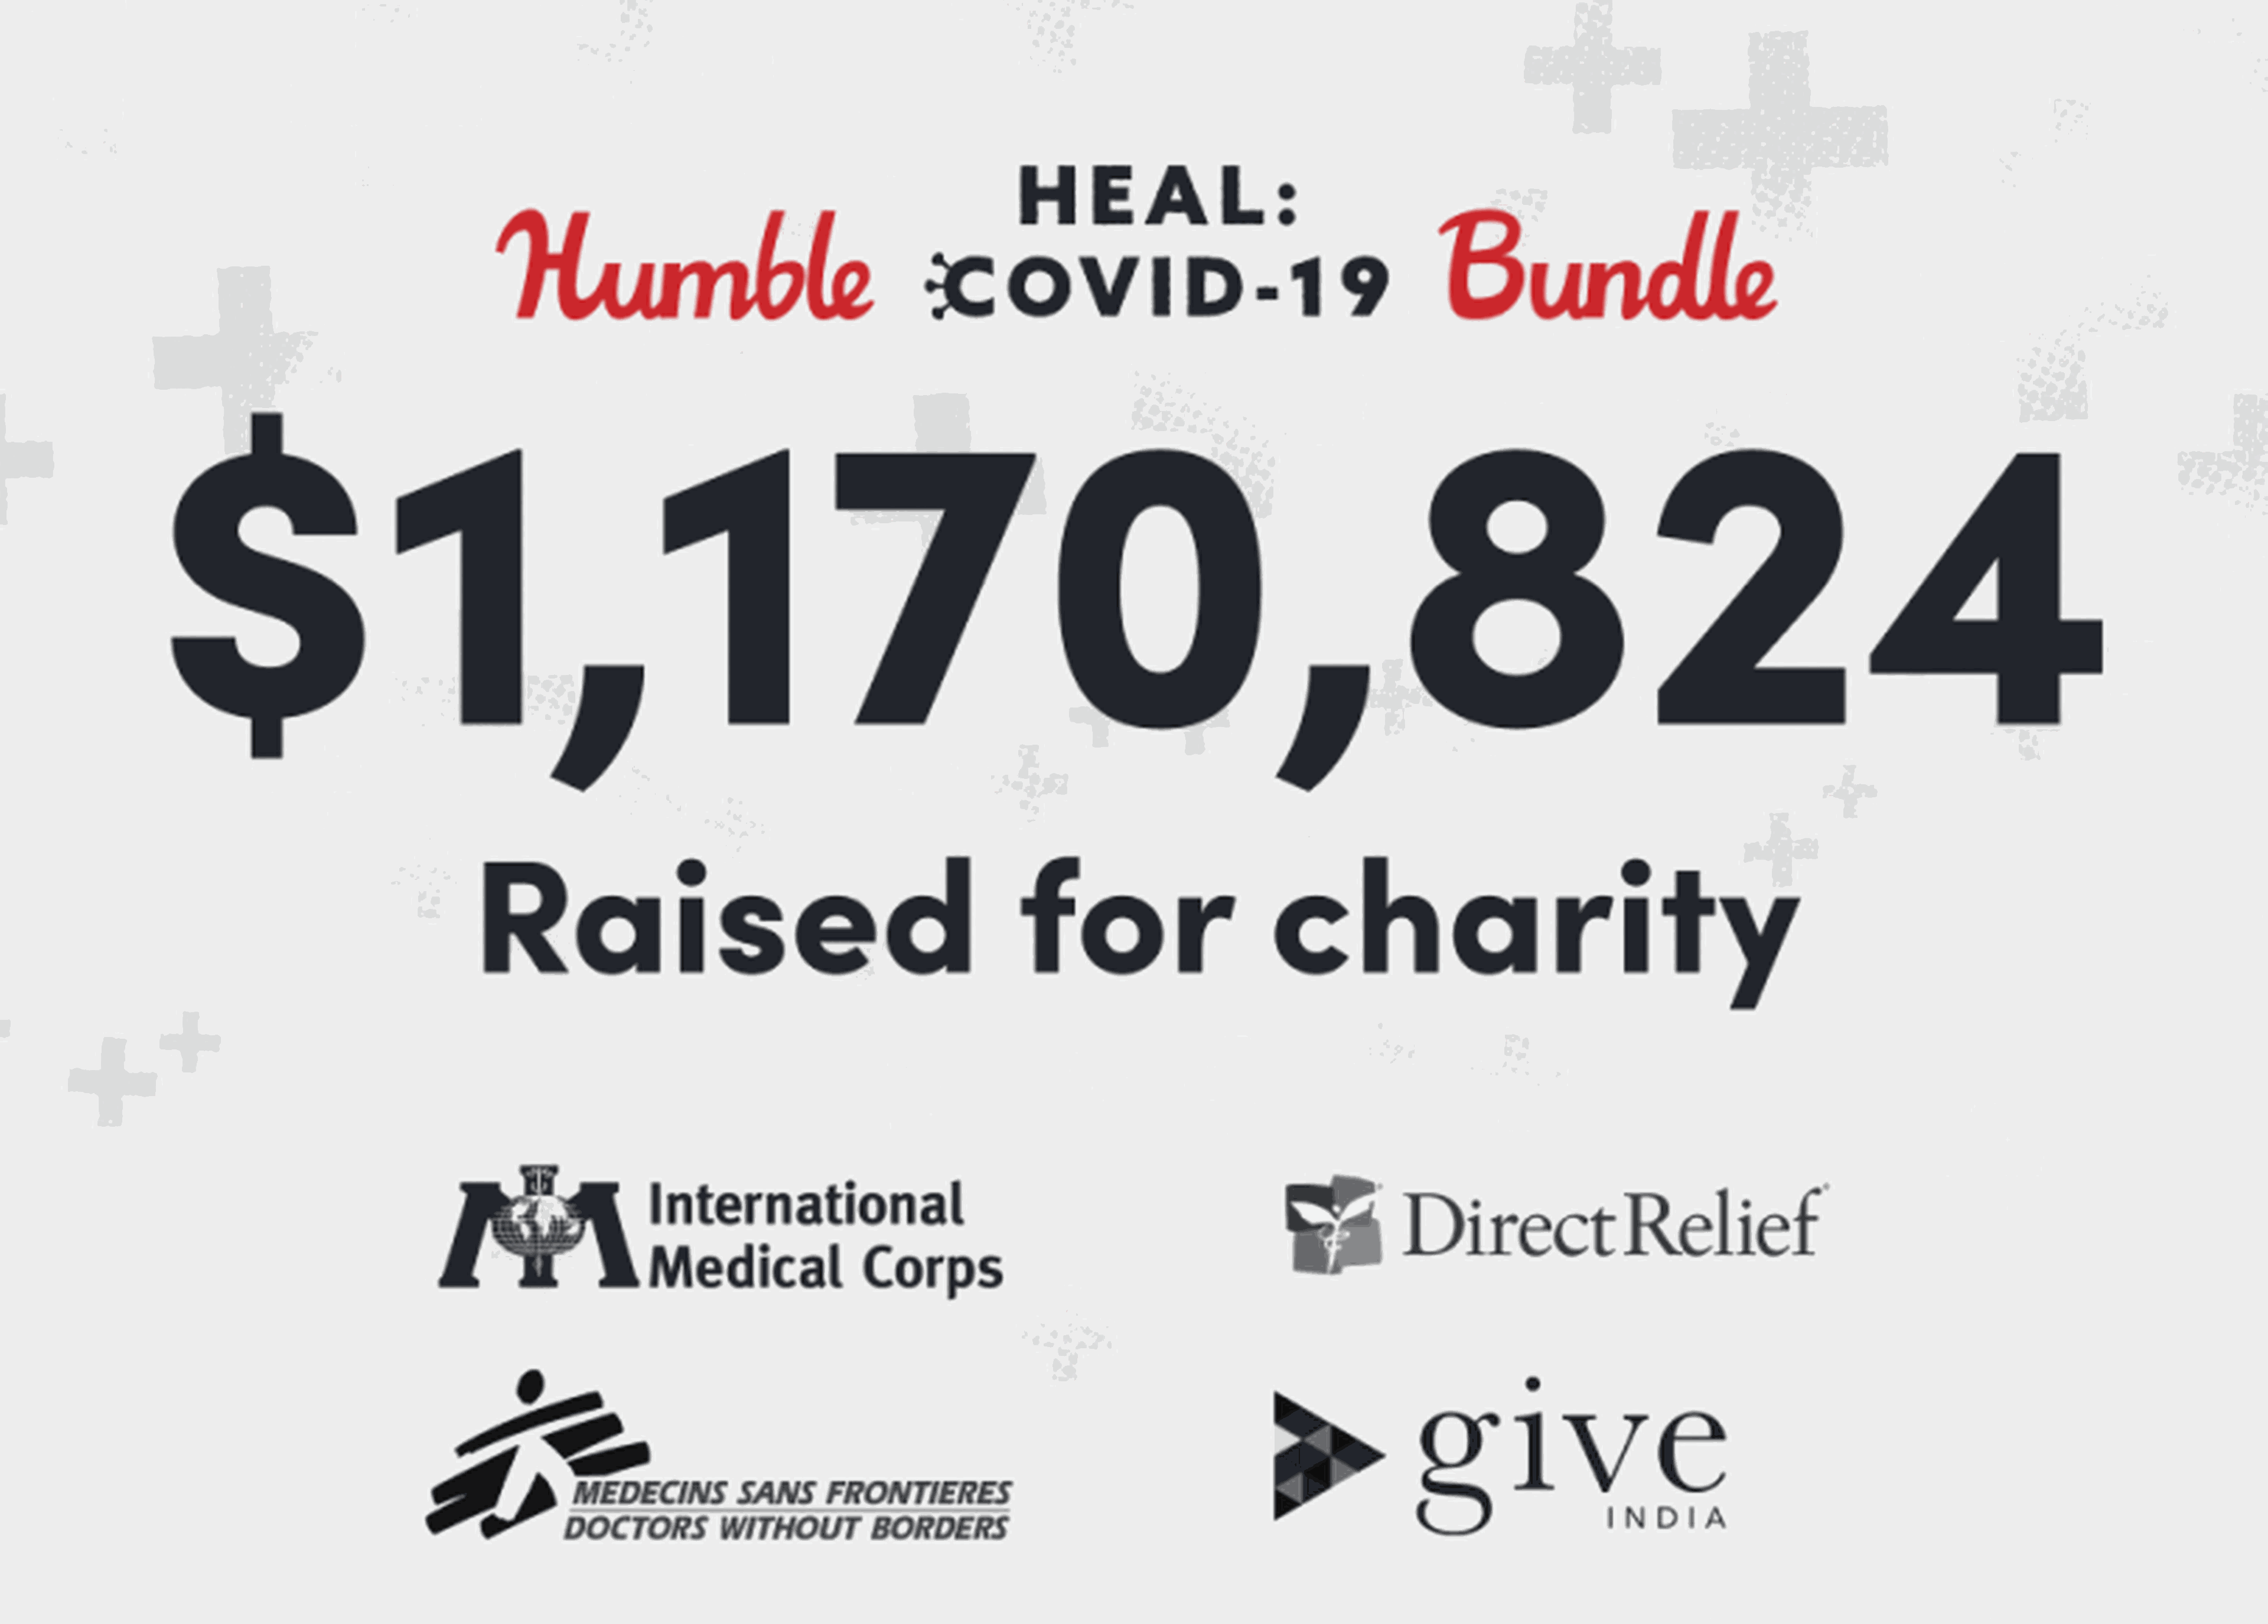 Humble Bundle Heal: Covid-19 Bundle